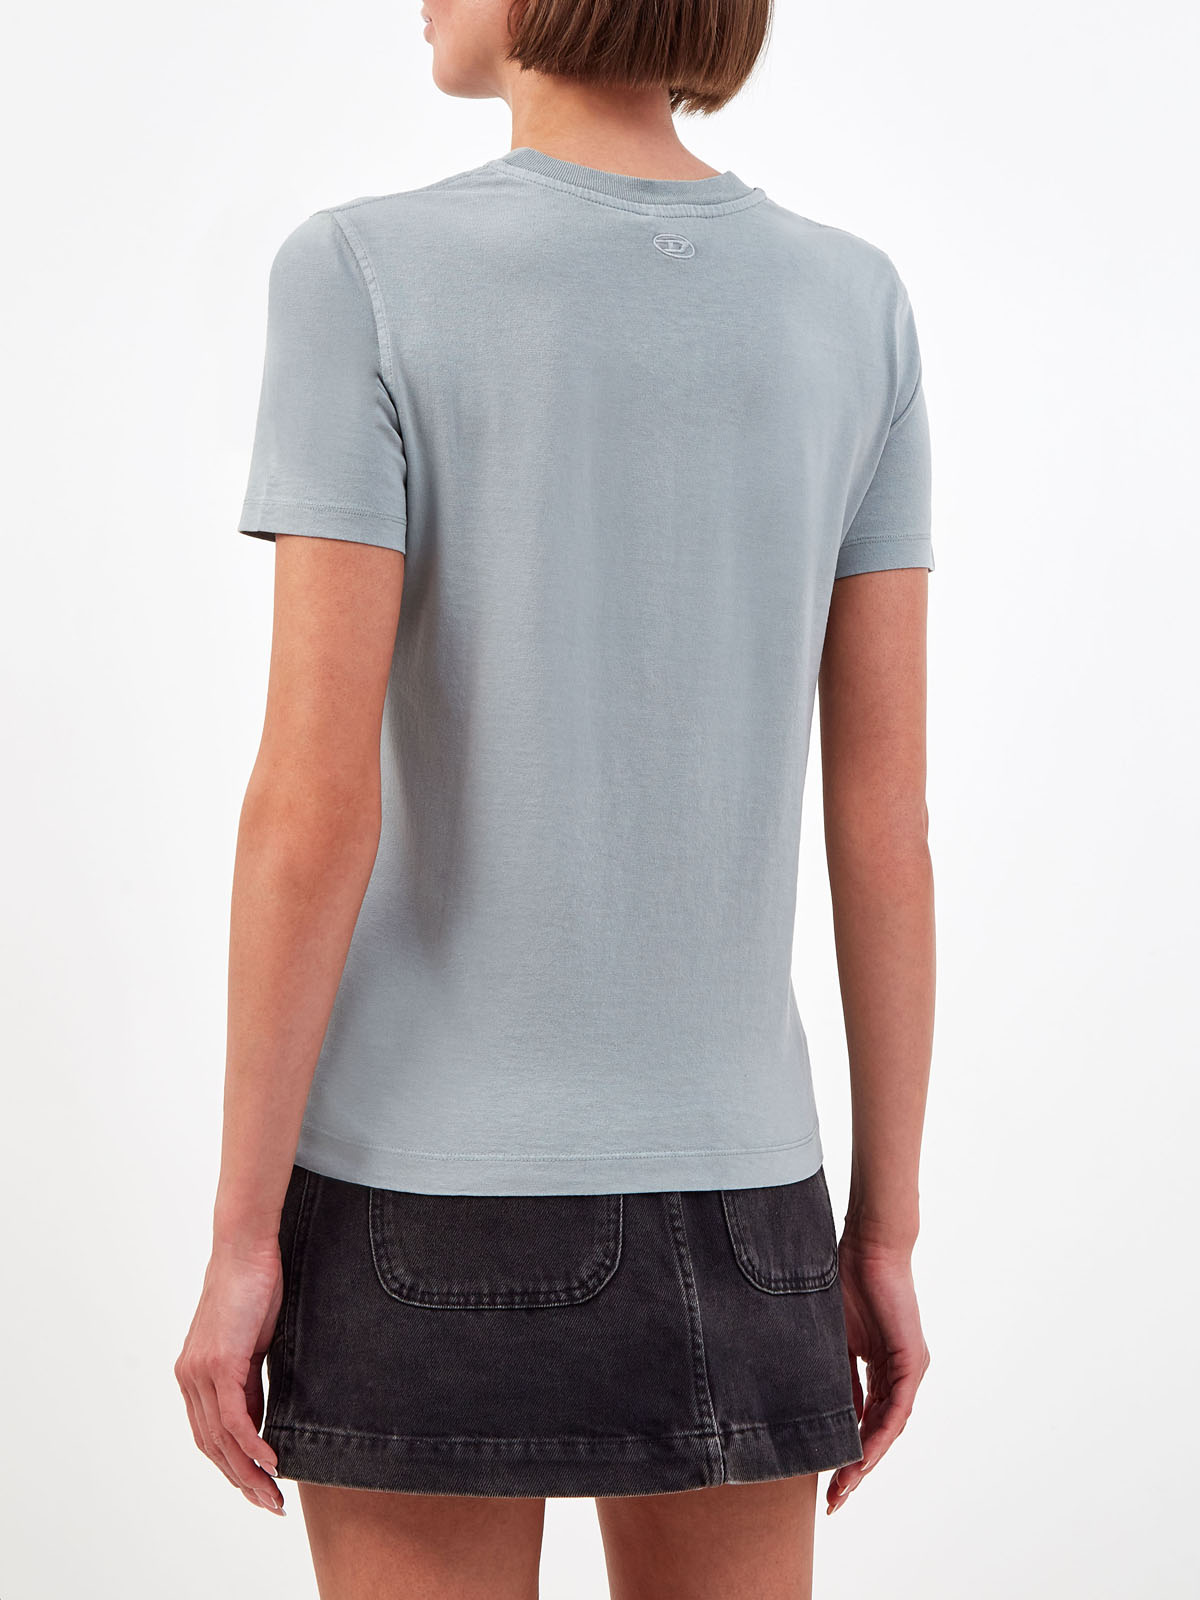 Хлопковая футболка T-Reg из джерси с цифровым принтом DIESEL, цвет серый, размер S;M;L;XL - фото 4